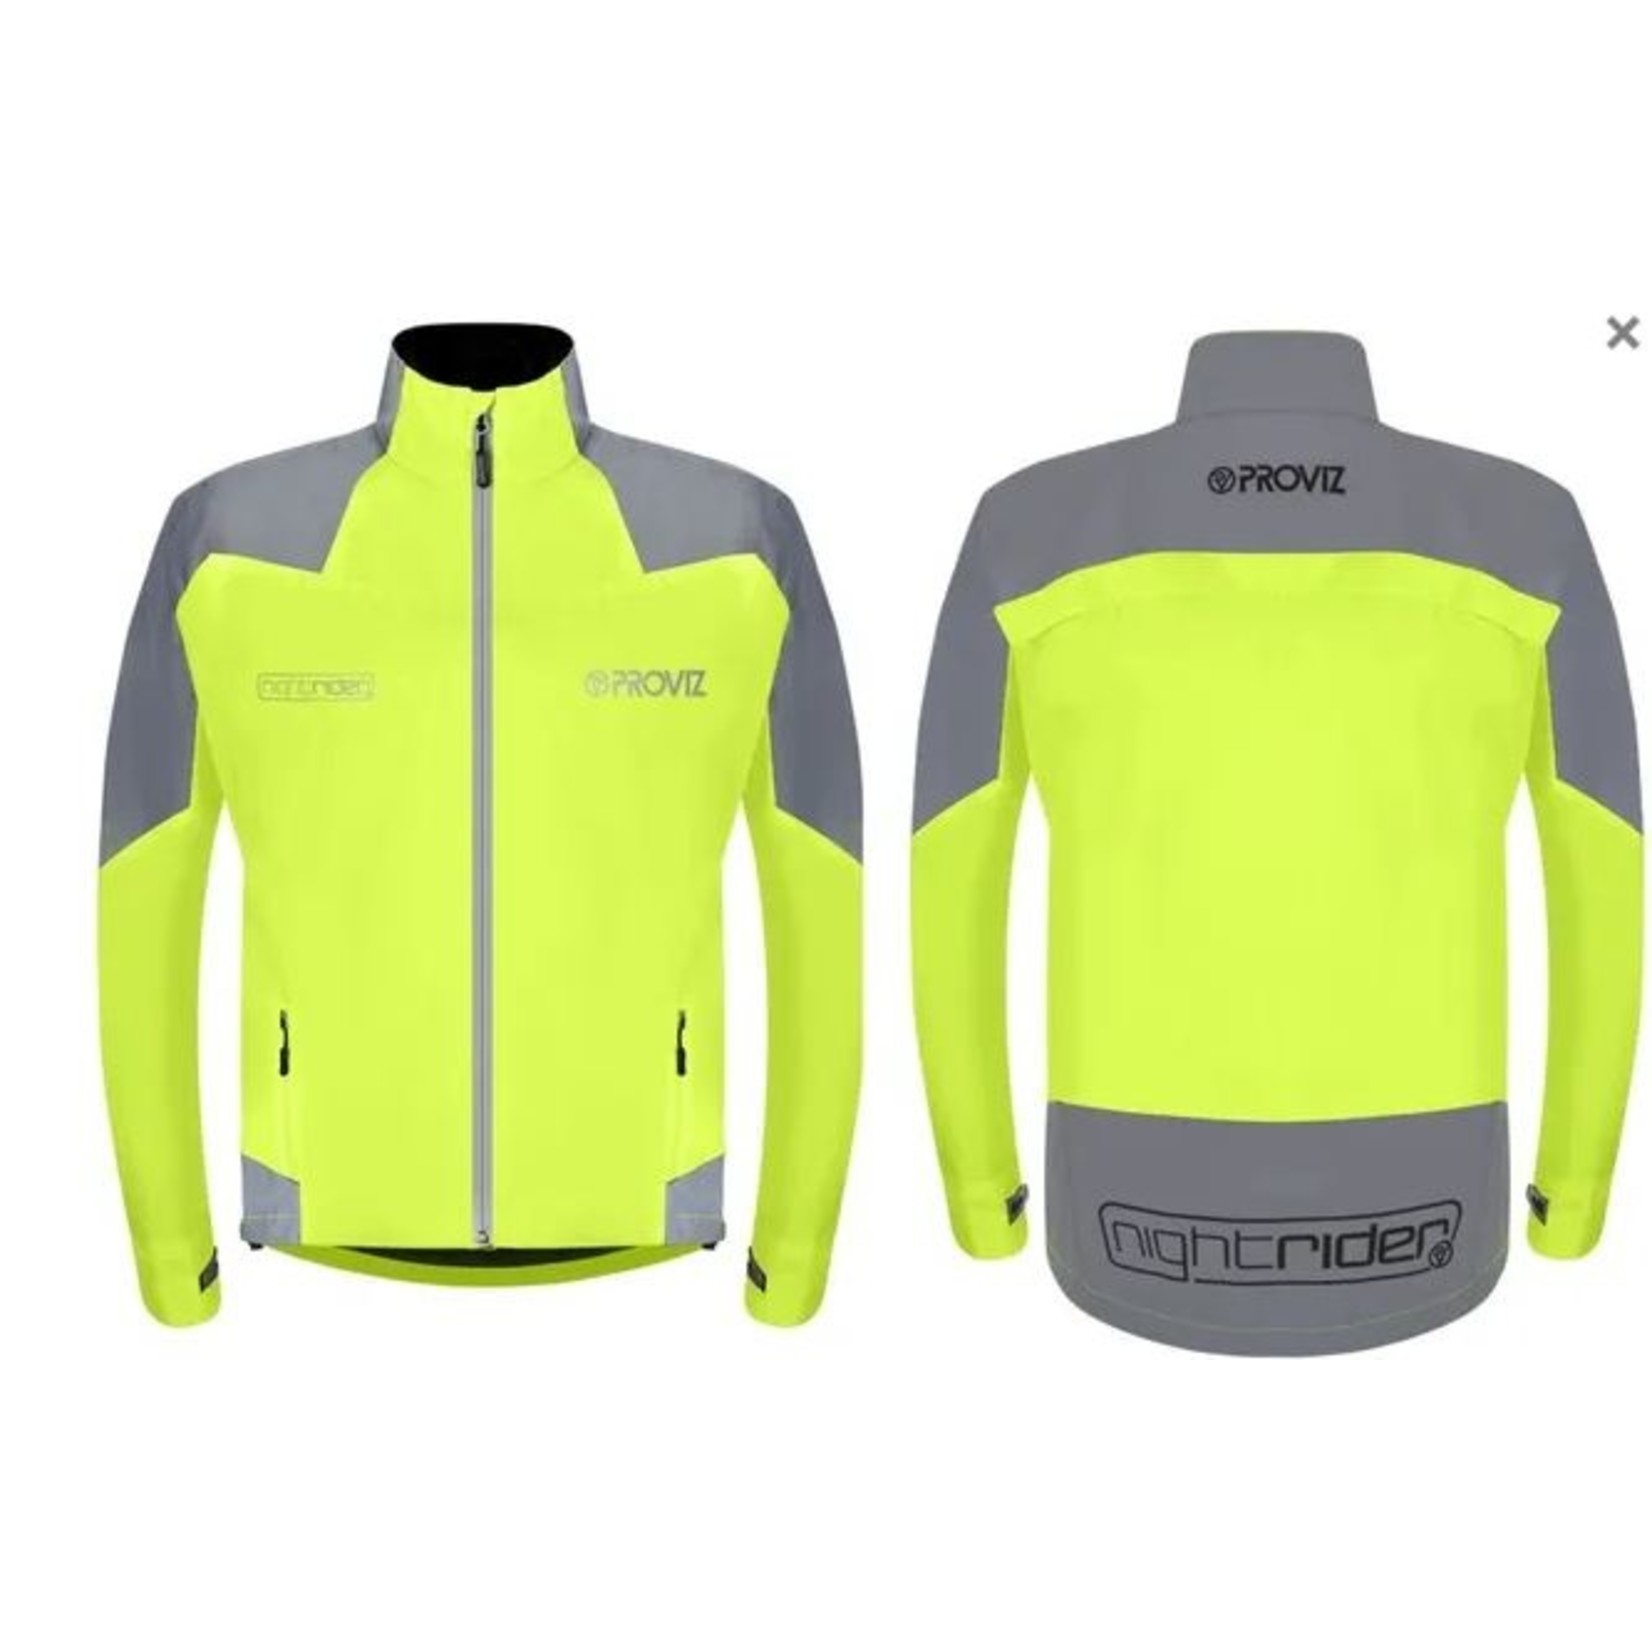 Proviz Proviz - Bike/Cycling Men's Nightrider-High Visibility Jacket - Small - Yellow